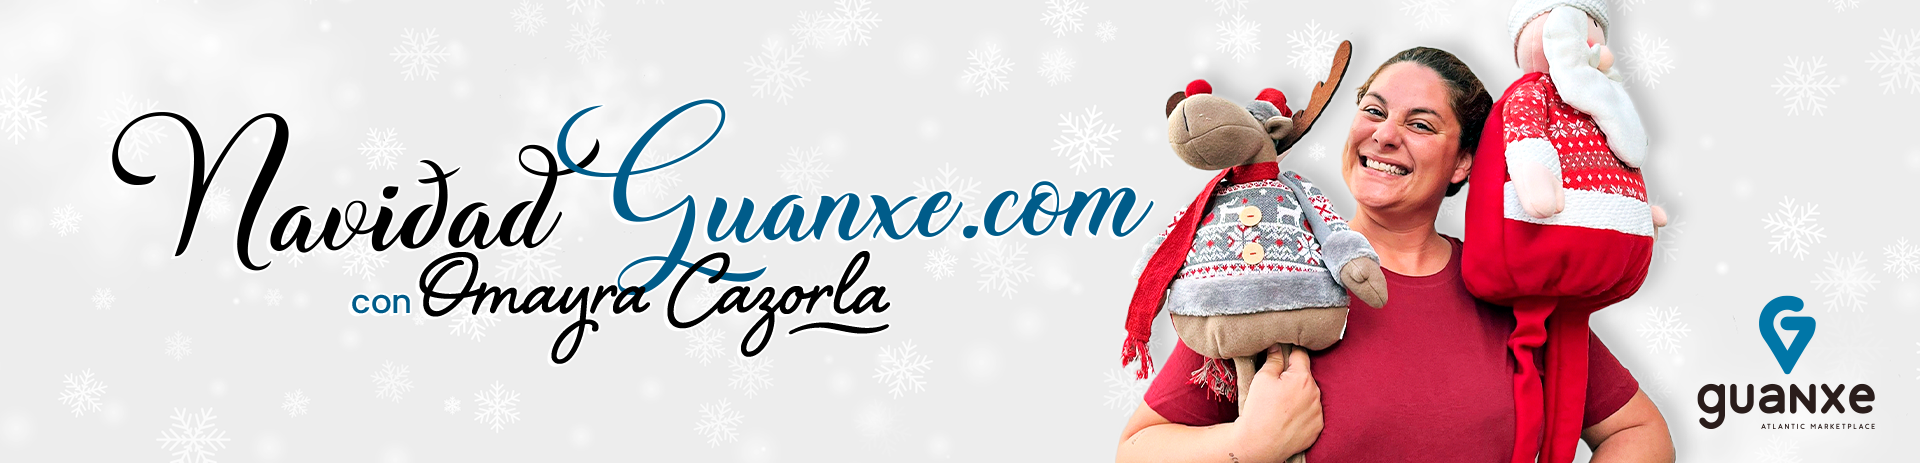 Navidad en Guanxe.com